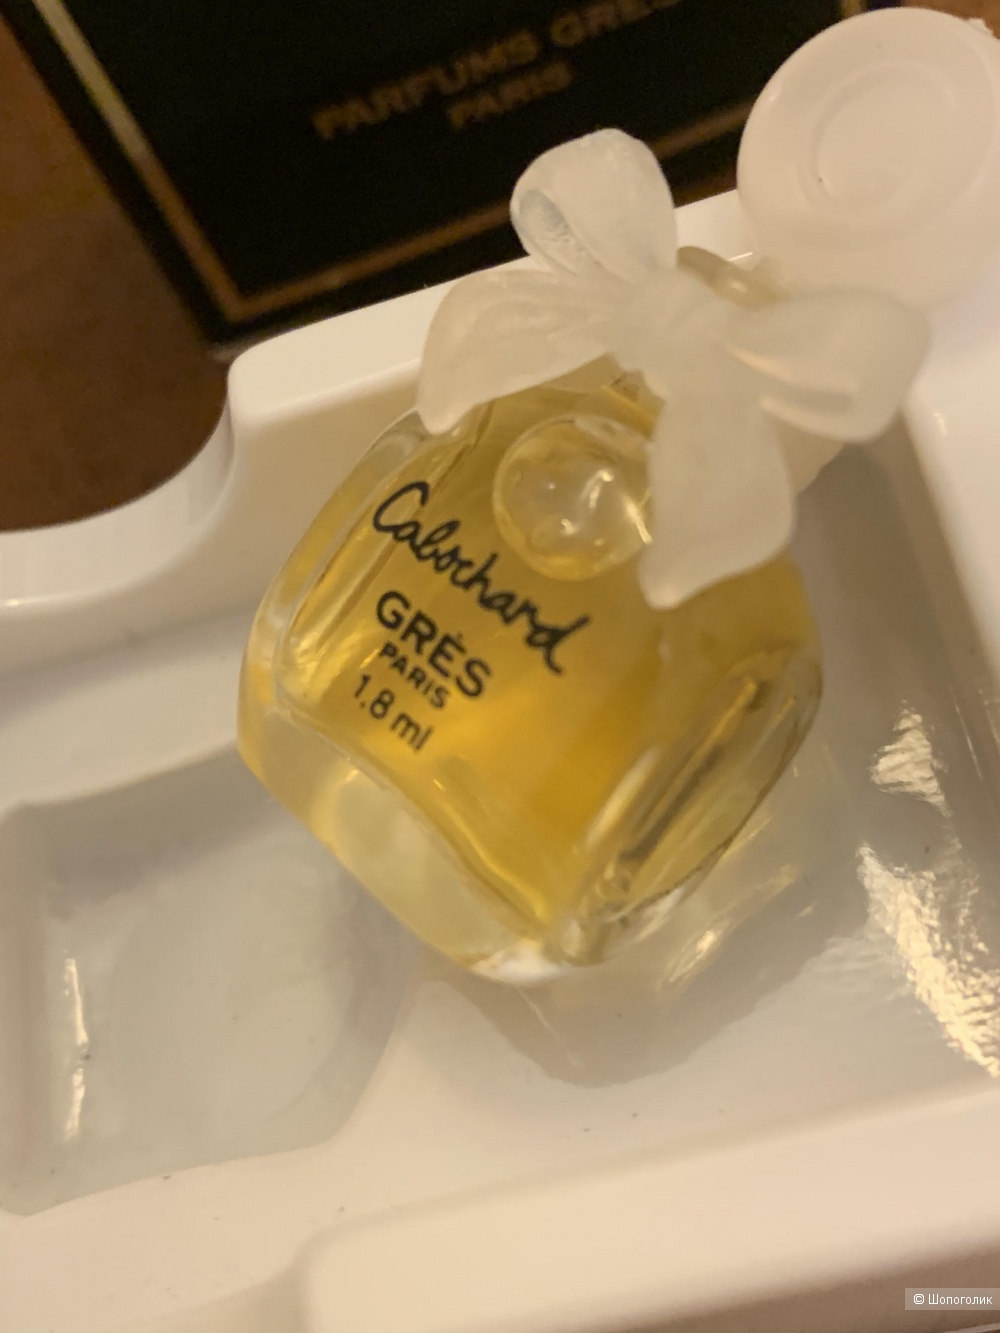 Cabochard Gres parfum 1,8 ml